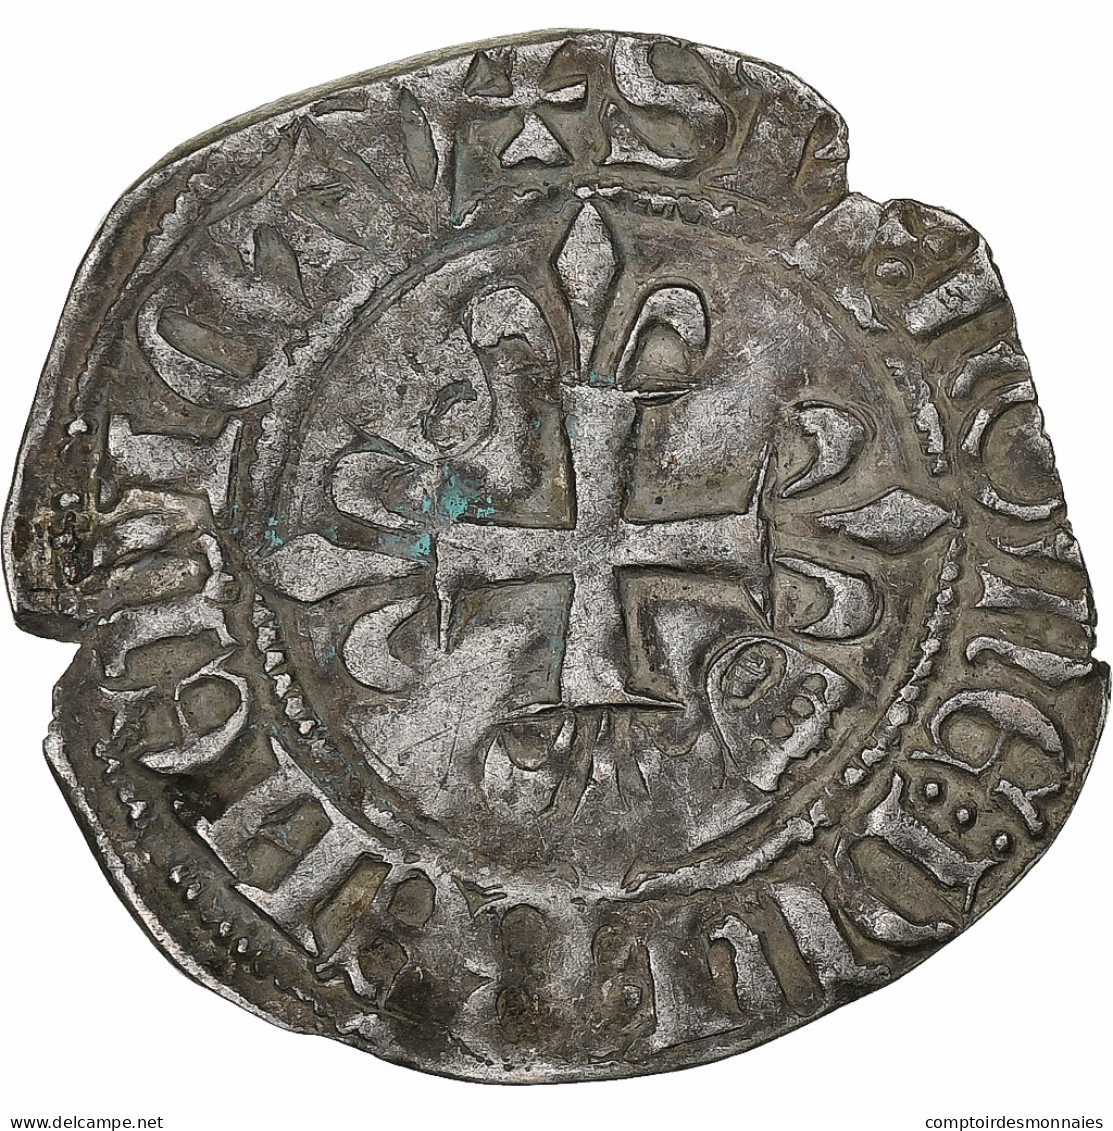 France, Charles VI, Florette, 1417-1422, Rouen, Billon, TTB, Duplessy:387 - 1380-1422 Karl VI. Der Vielgeliebte